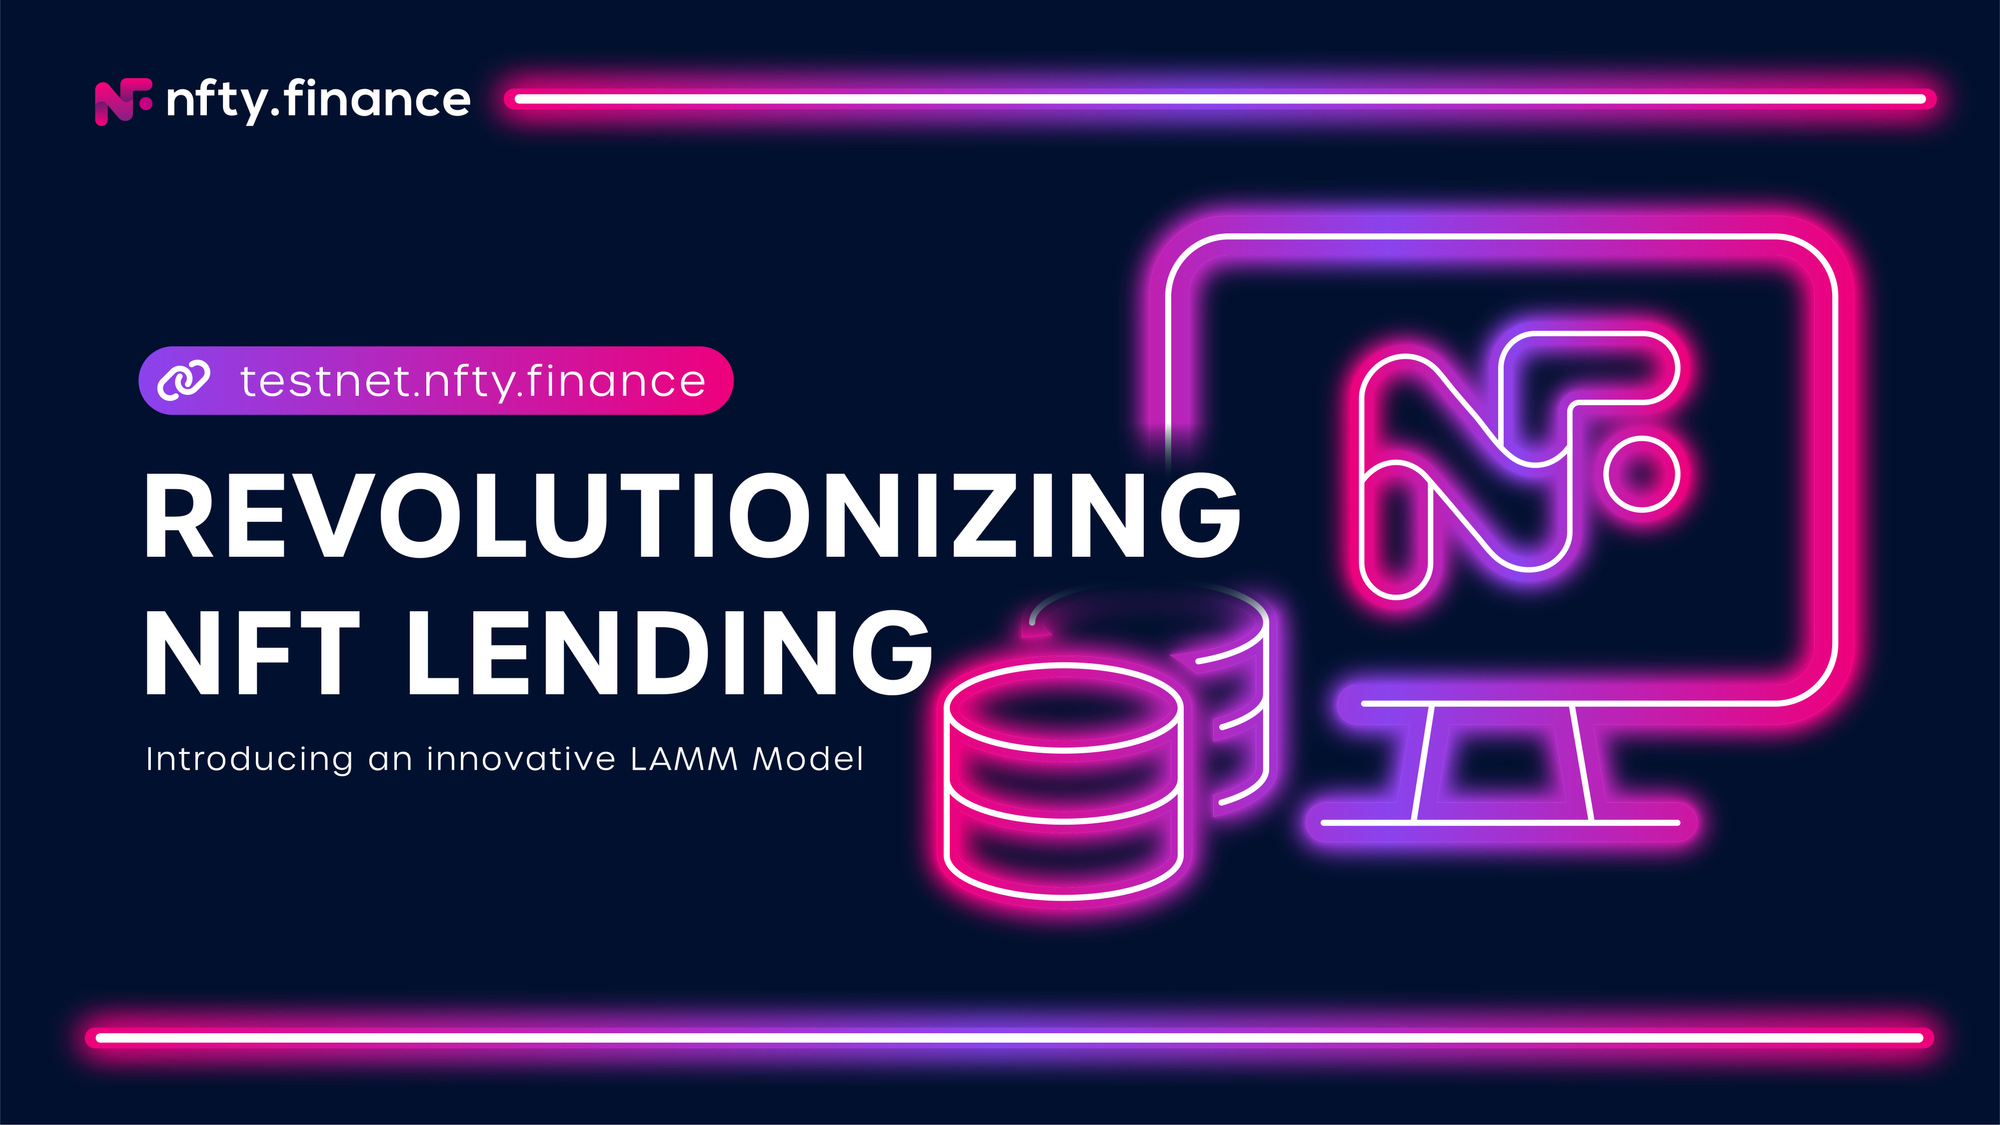 NFTY Finance: Revolutionizing NFT Lending With an Innovative LAMM Model